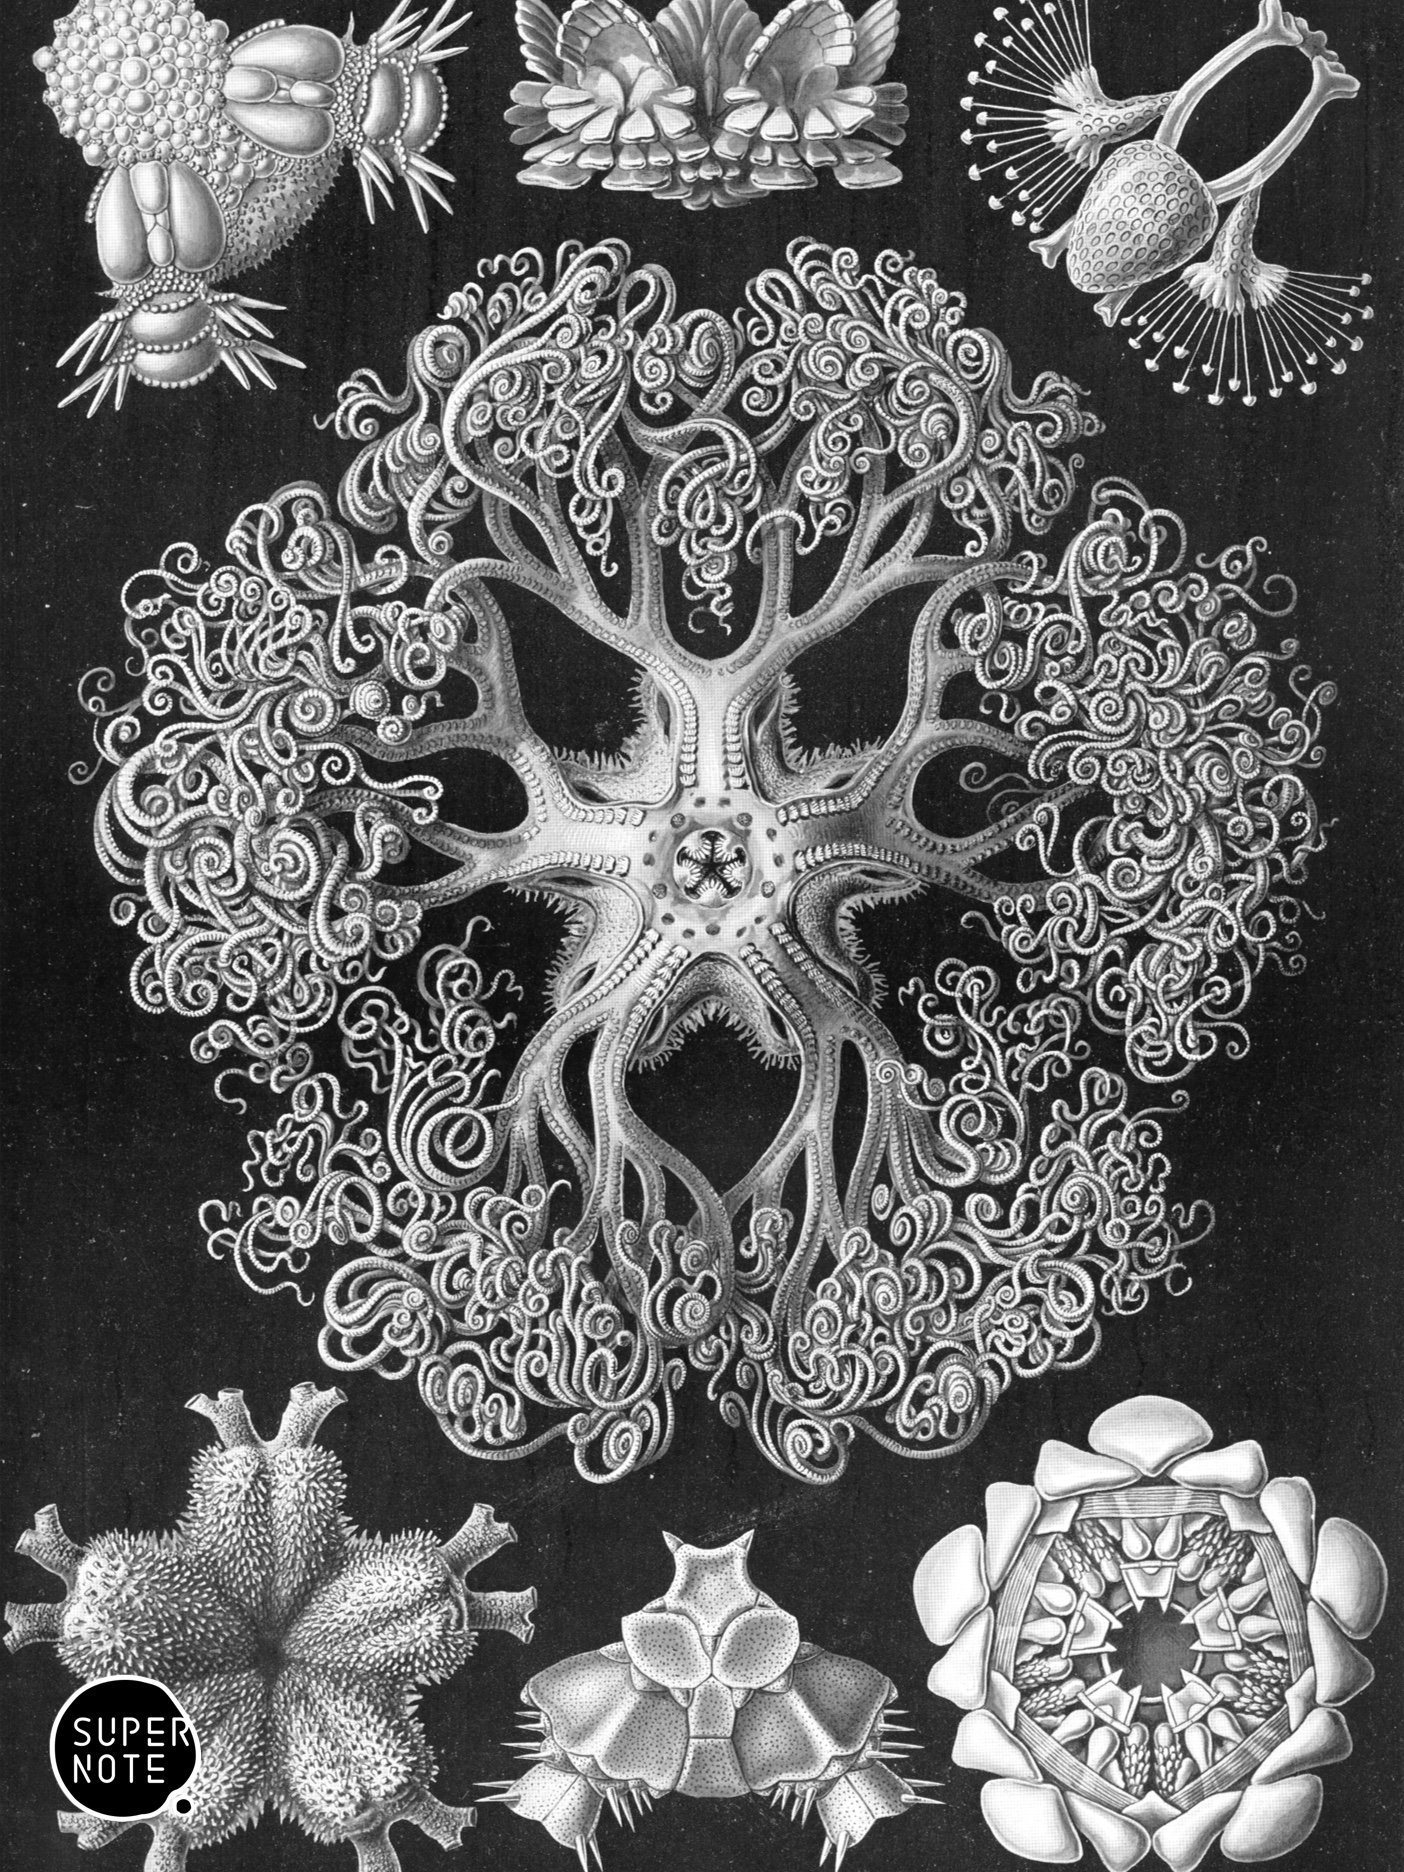 Supernote Screensaver - Ernst Haeckell #067